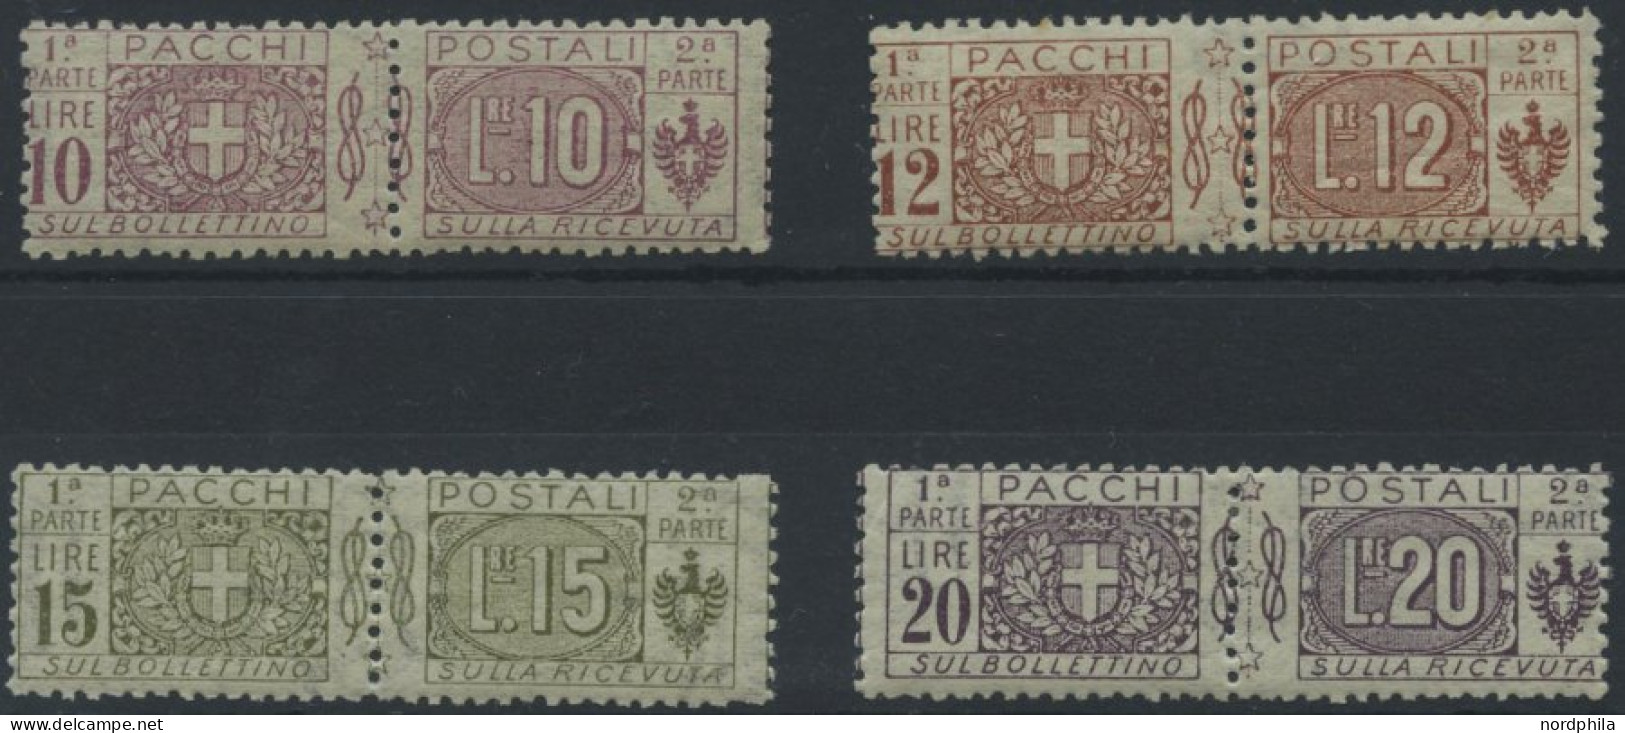 PAKETMARKEN Pa 16-19 , 1921/22, Wappen Und Wertziffer, Falzrest, Prachtsatz - Unclassified